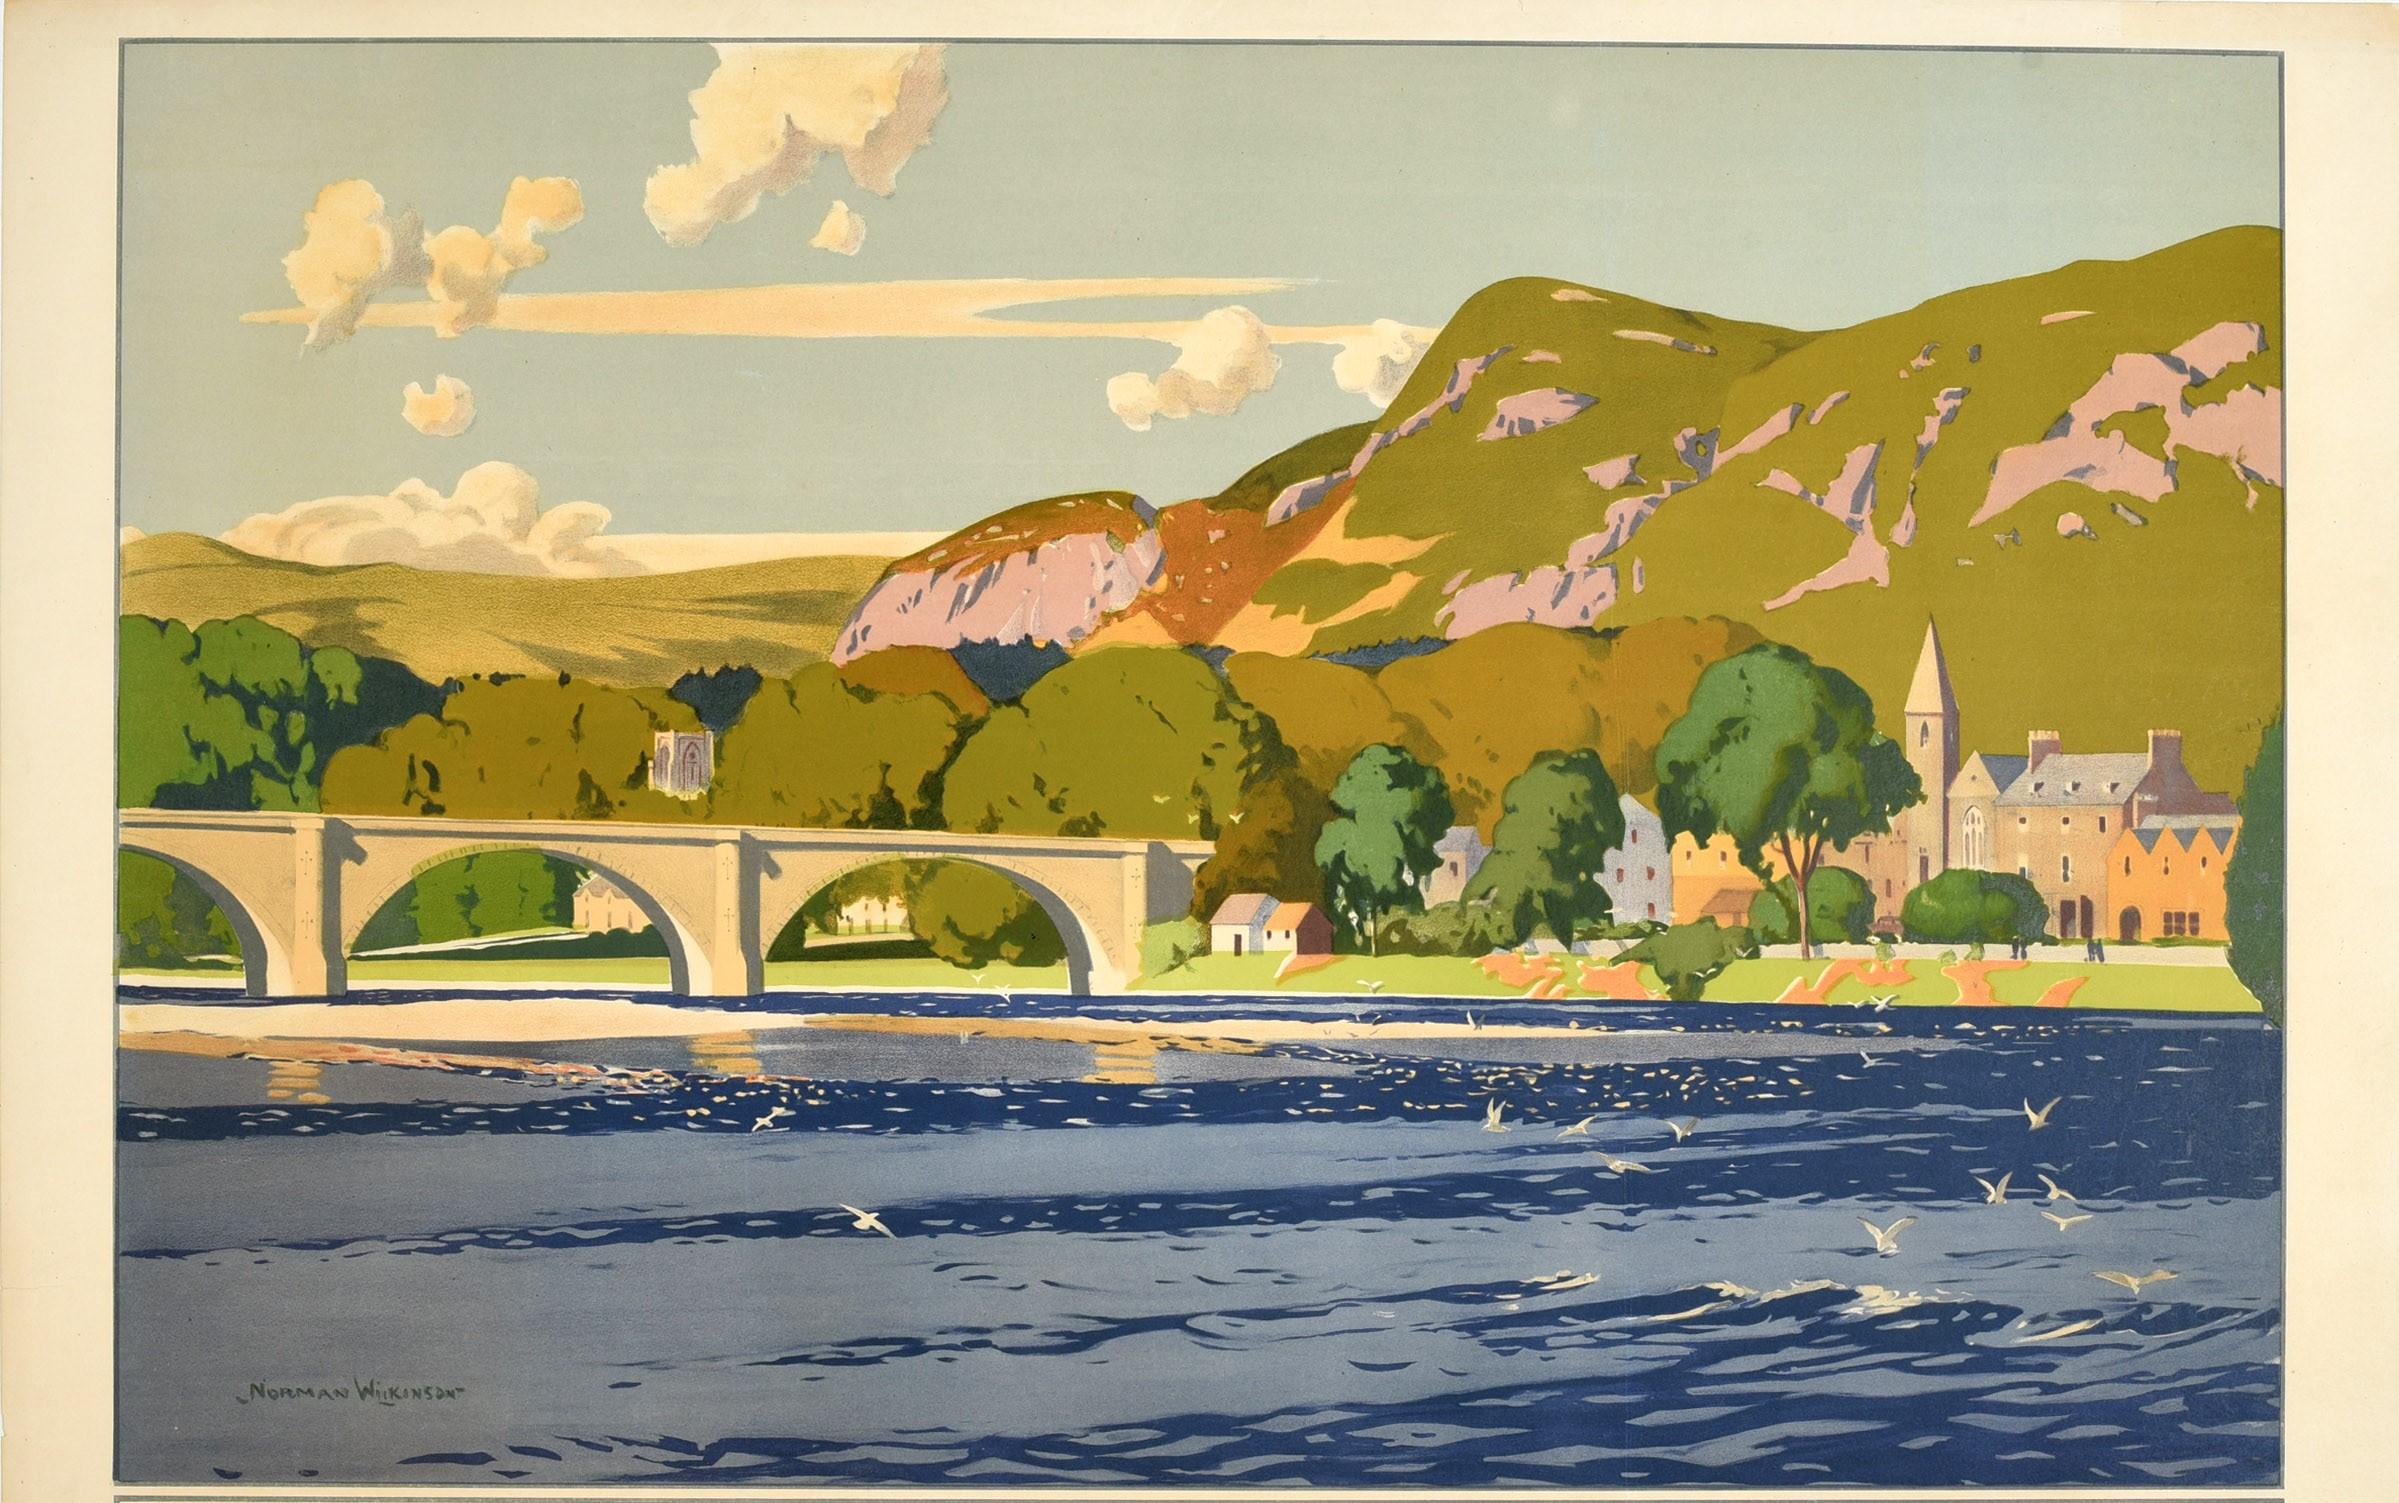 Original Vintage Poster Dunkeld Cathedral River Tay LMS LNER Railway Travel Art - Print by Norman Wilkinson CBE PRI